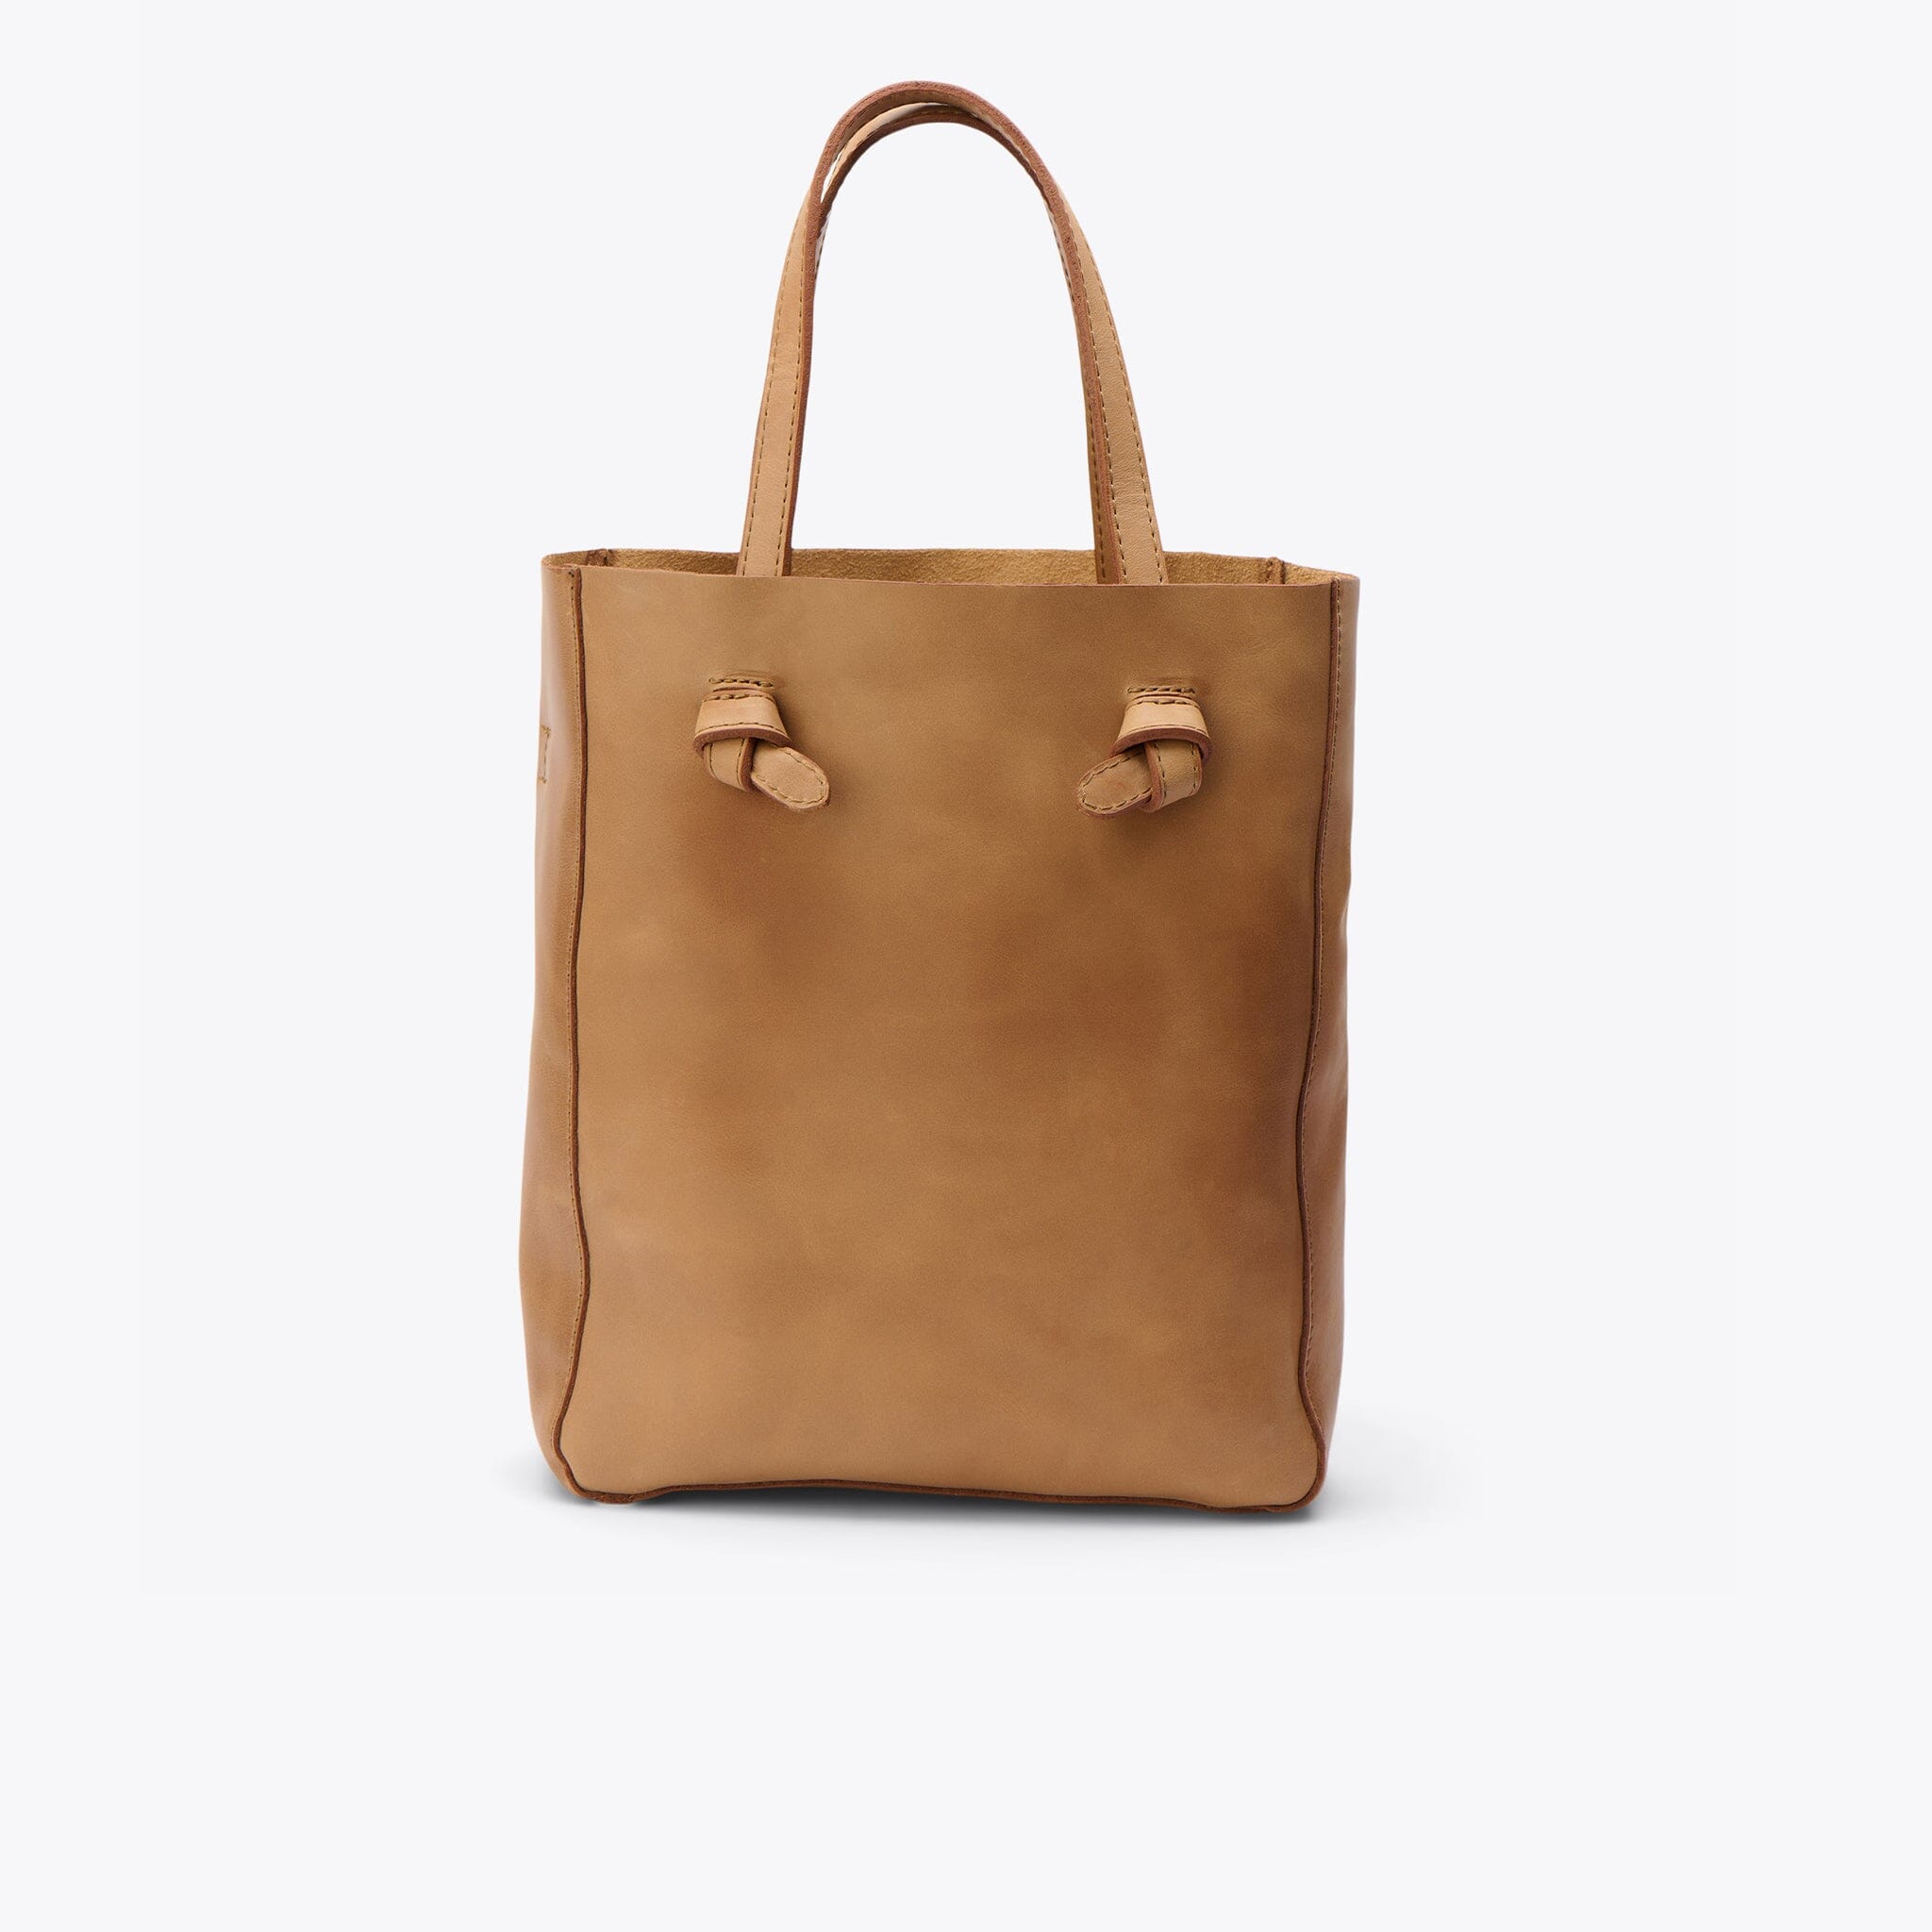 Simone Convertible Shopper Almond Leather Handbag - unlined Nisolo 